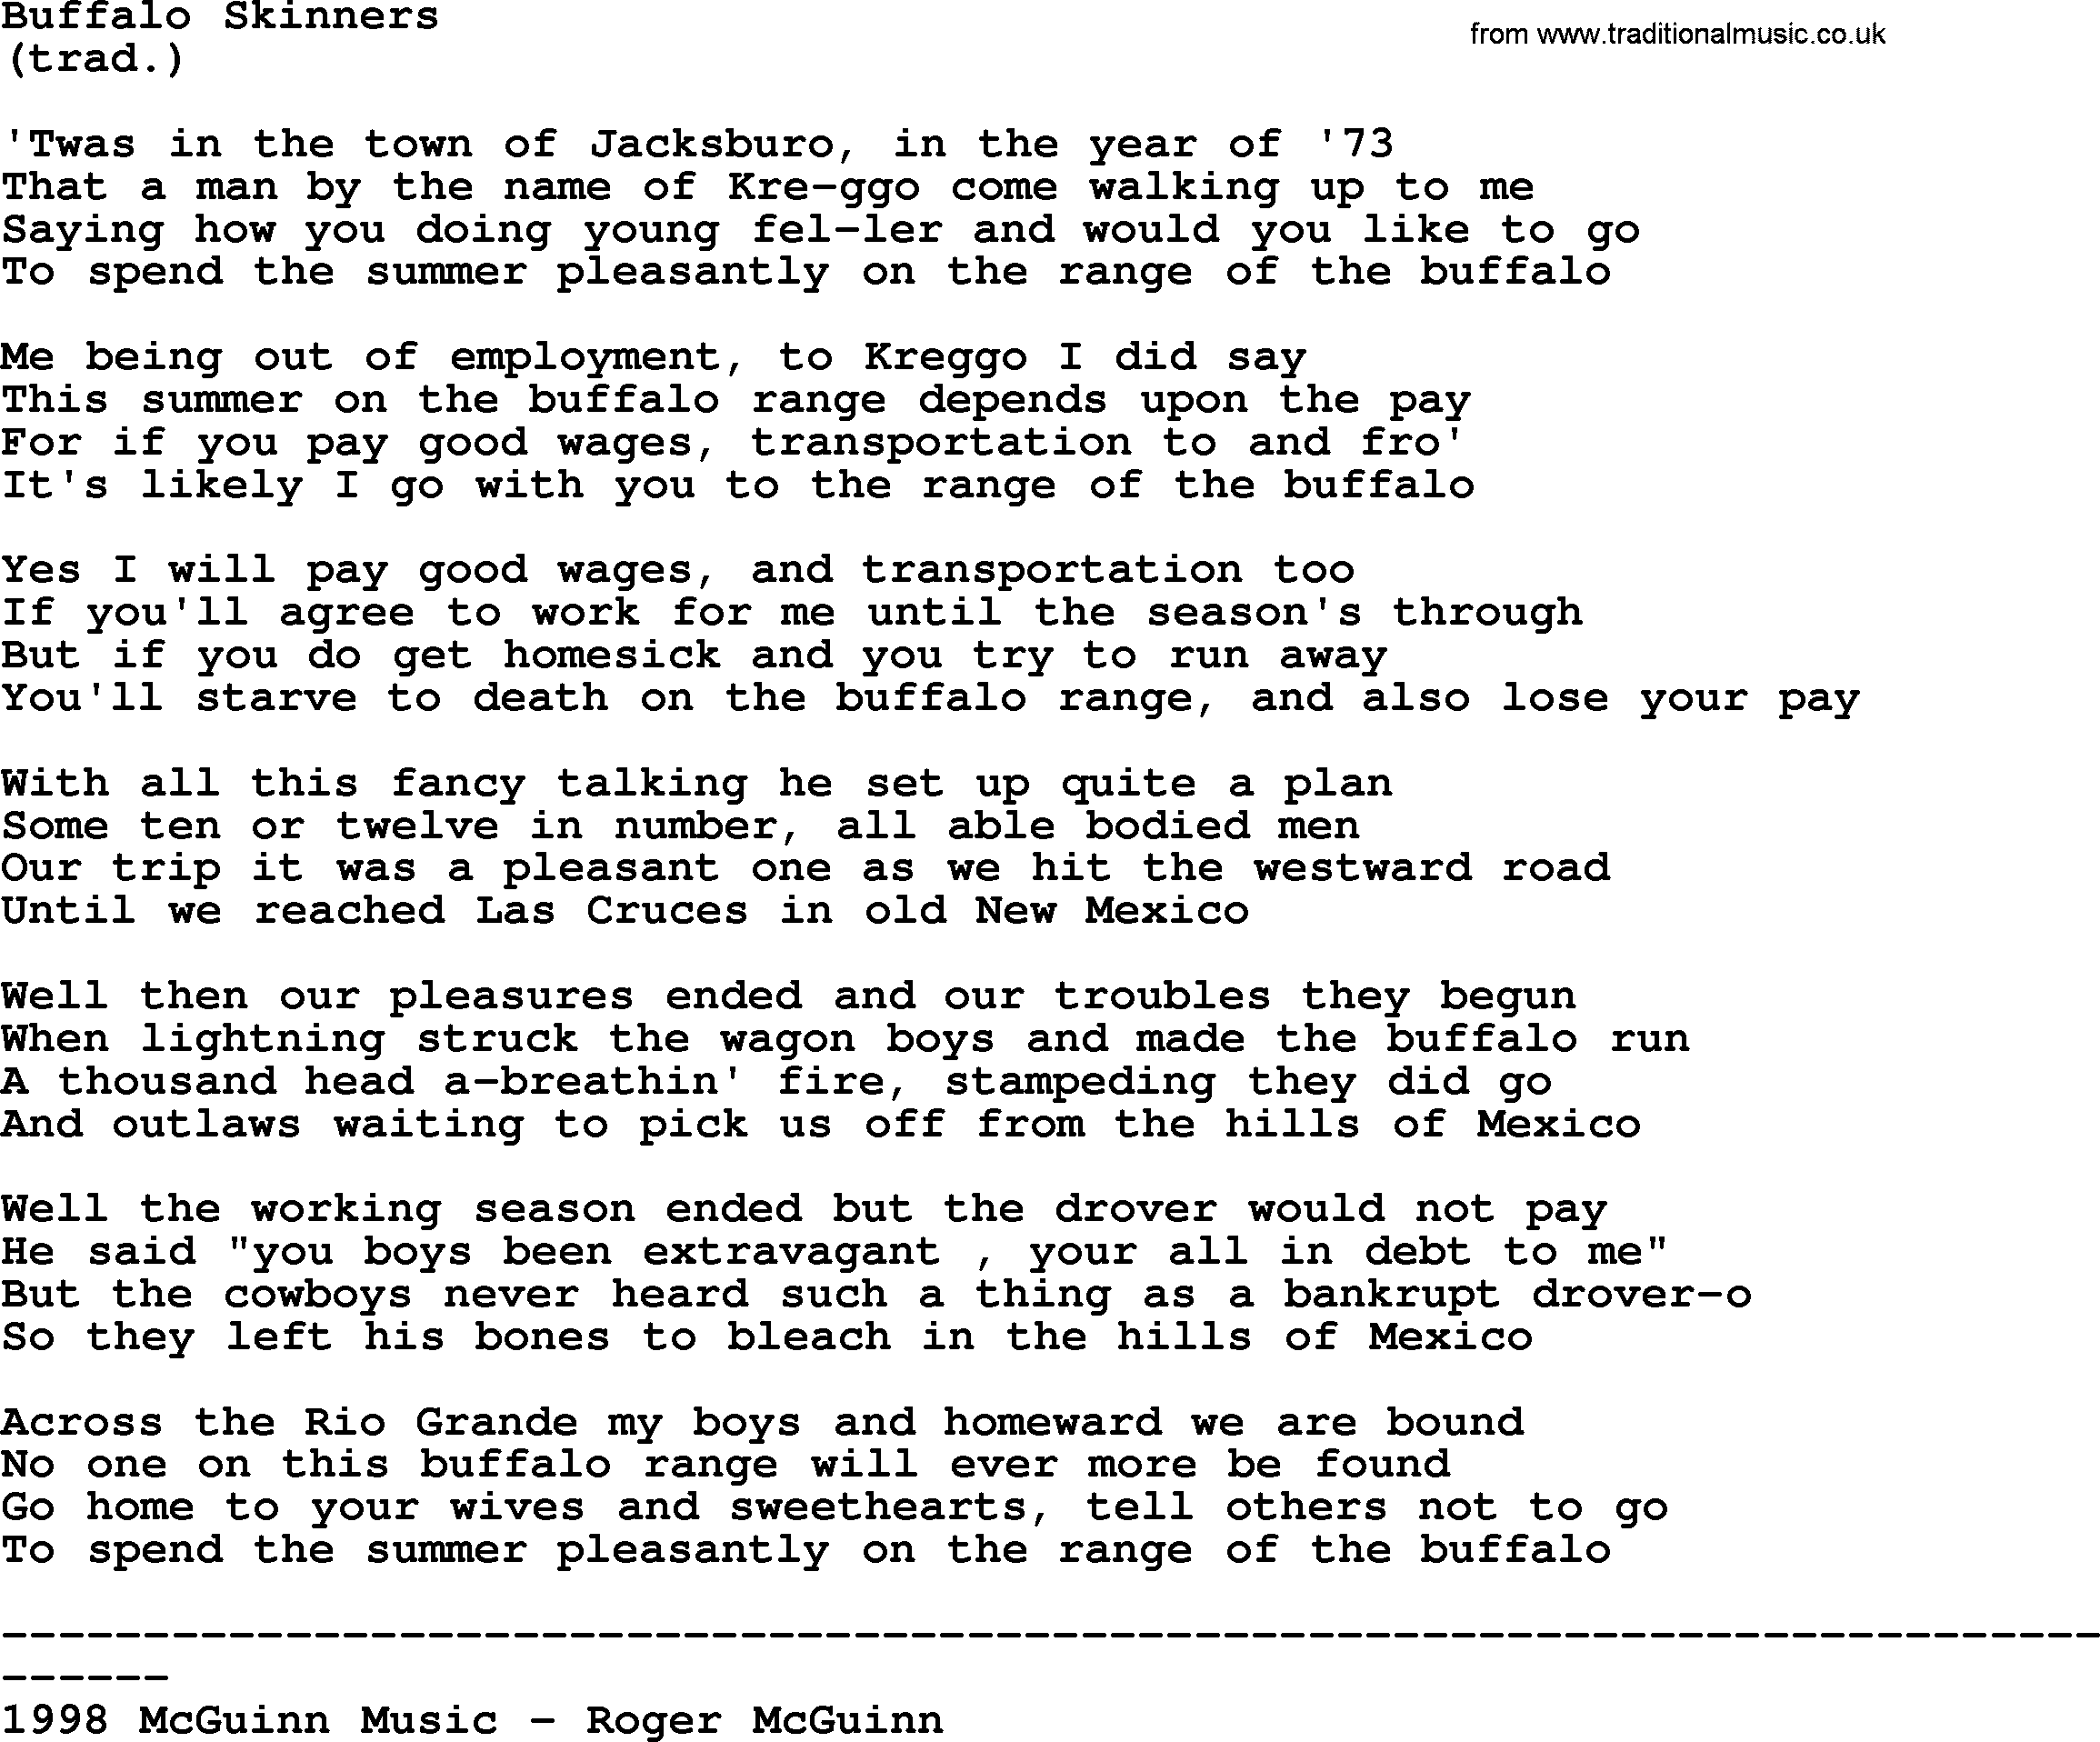 The Byrds song Buffalo Skinners, lyrics